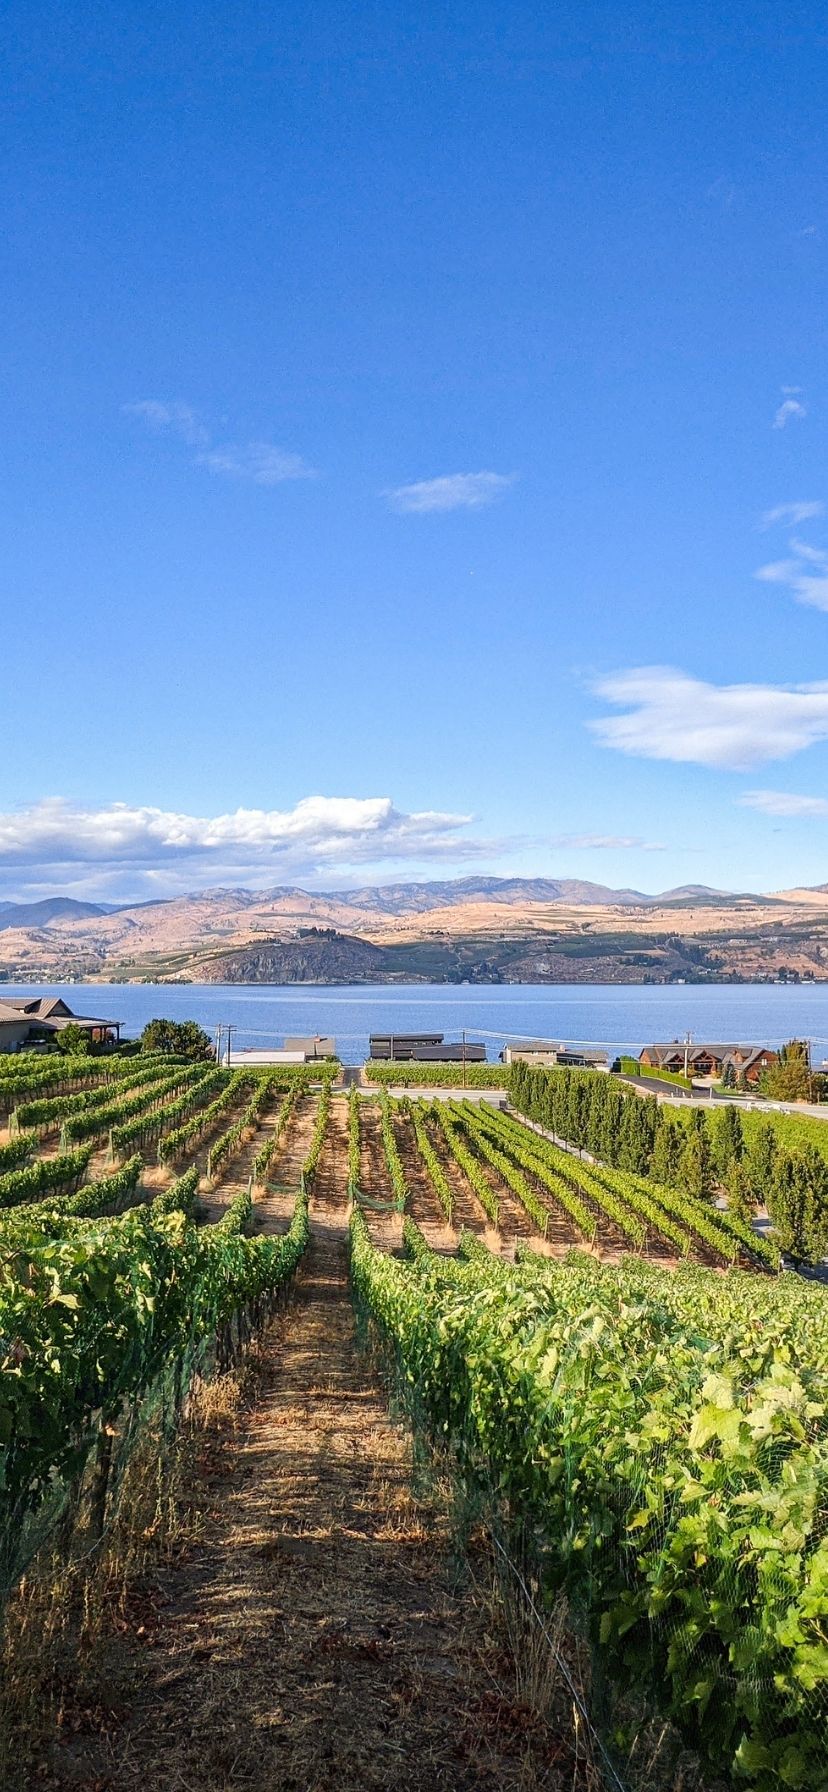 Vineyard View Overlook at Lake Chelan Washington Wine Country